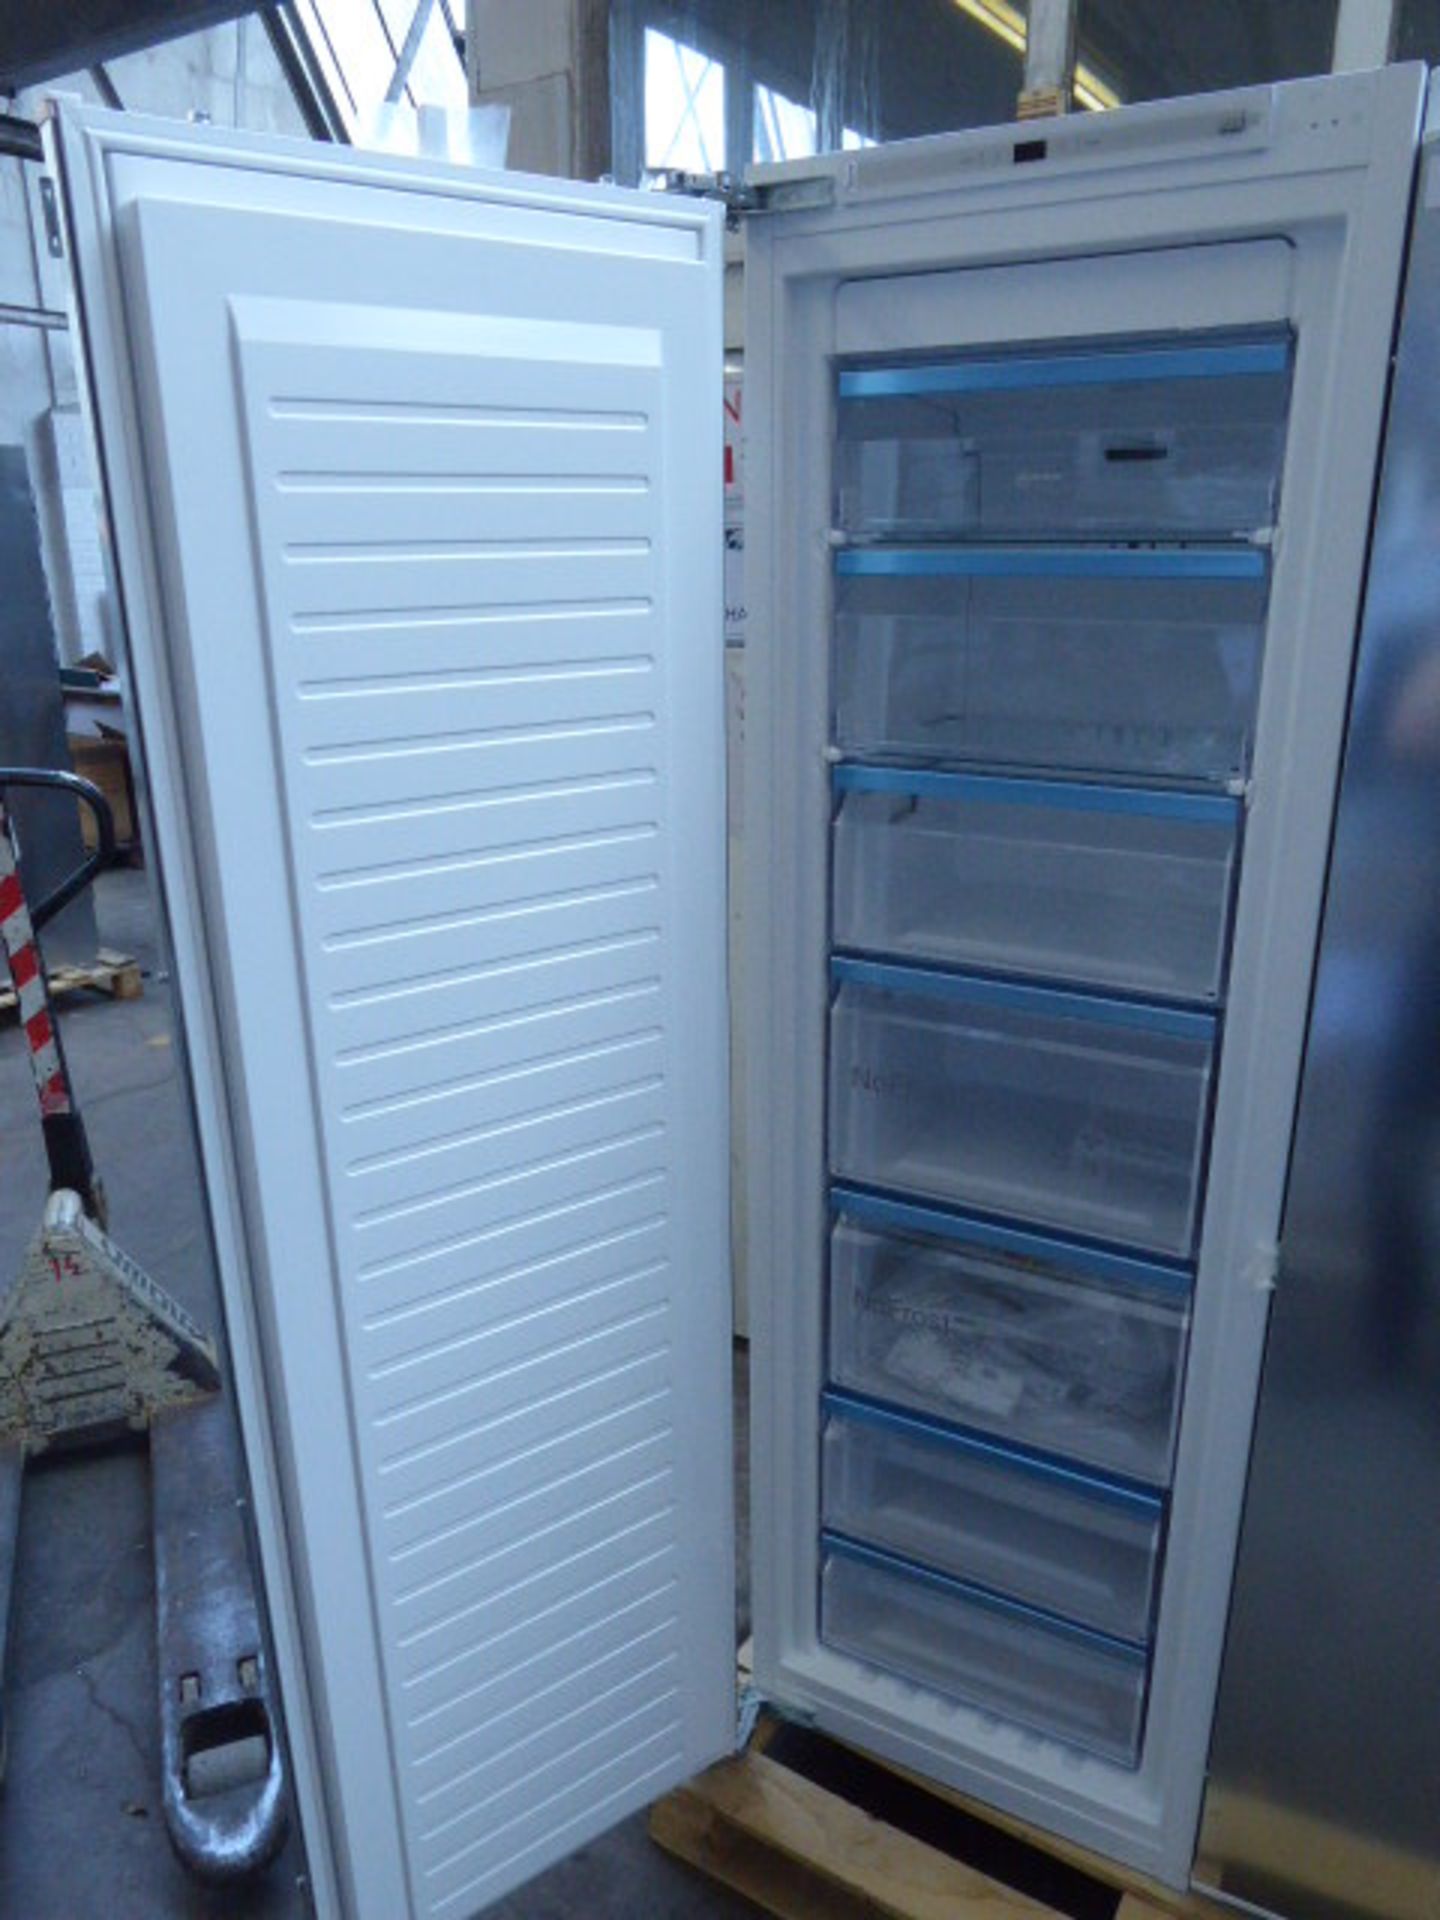 GI7813EF0GB Neff Built-in upright freezer - Image 2 of 2